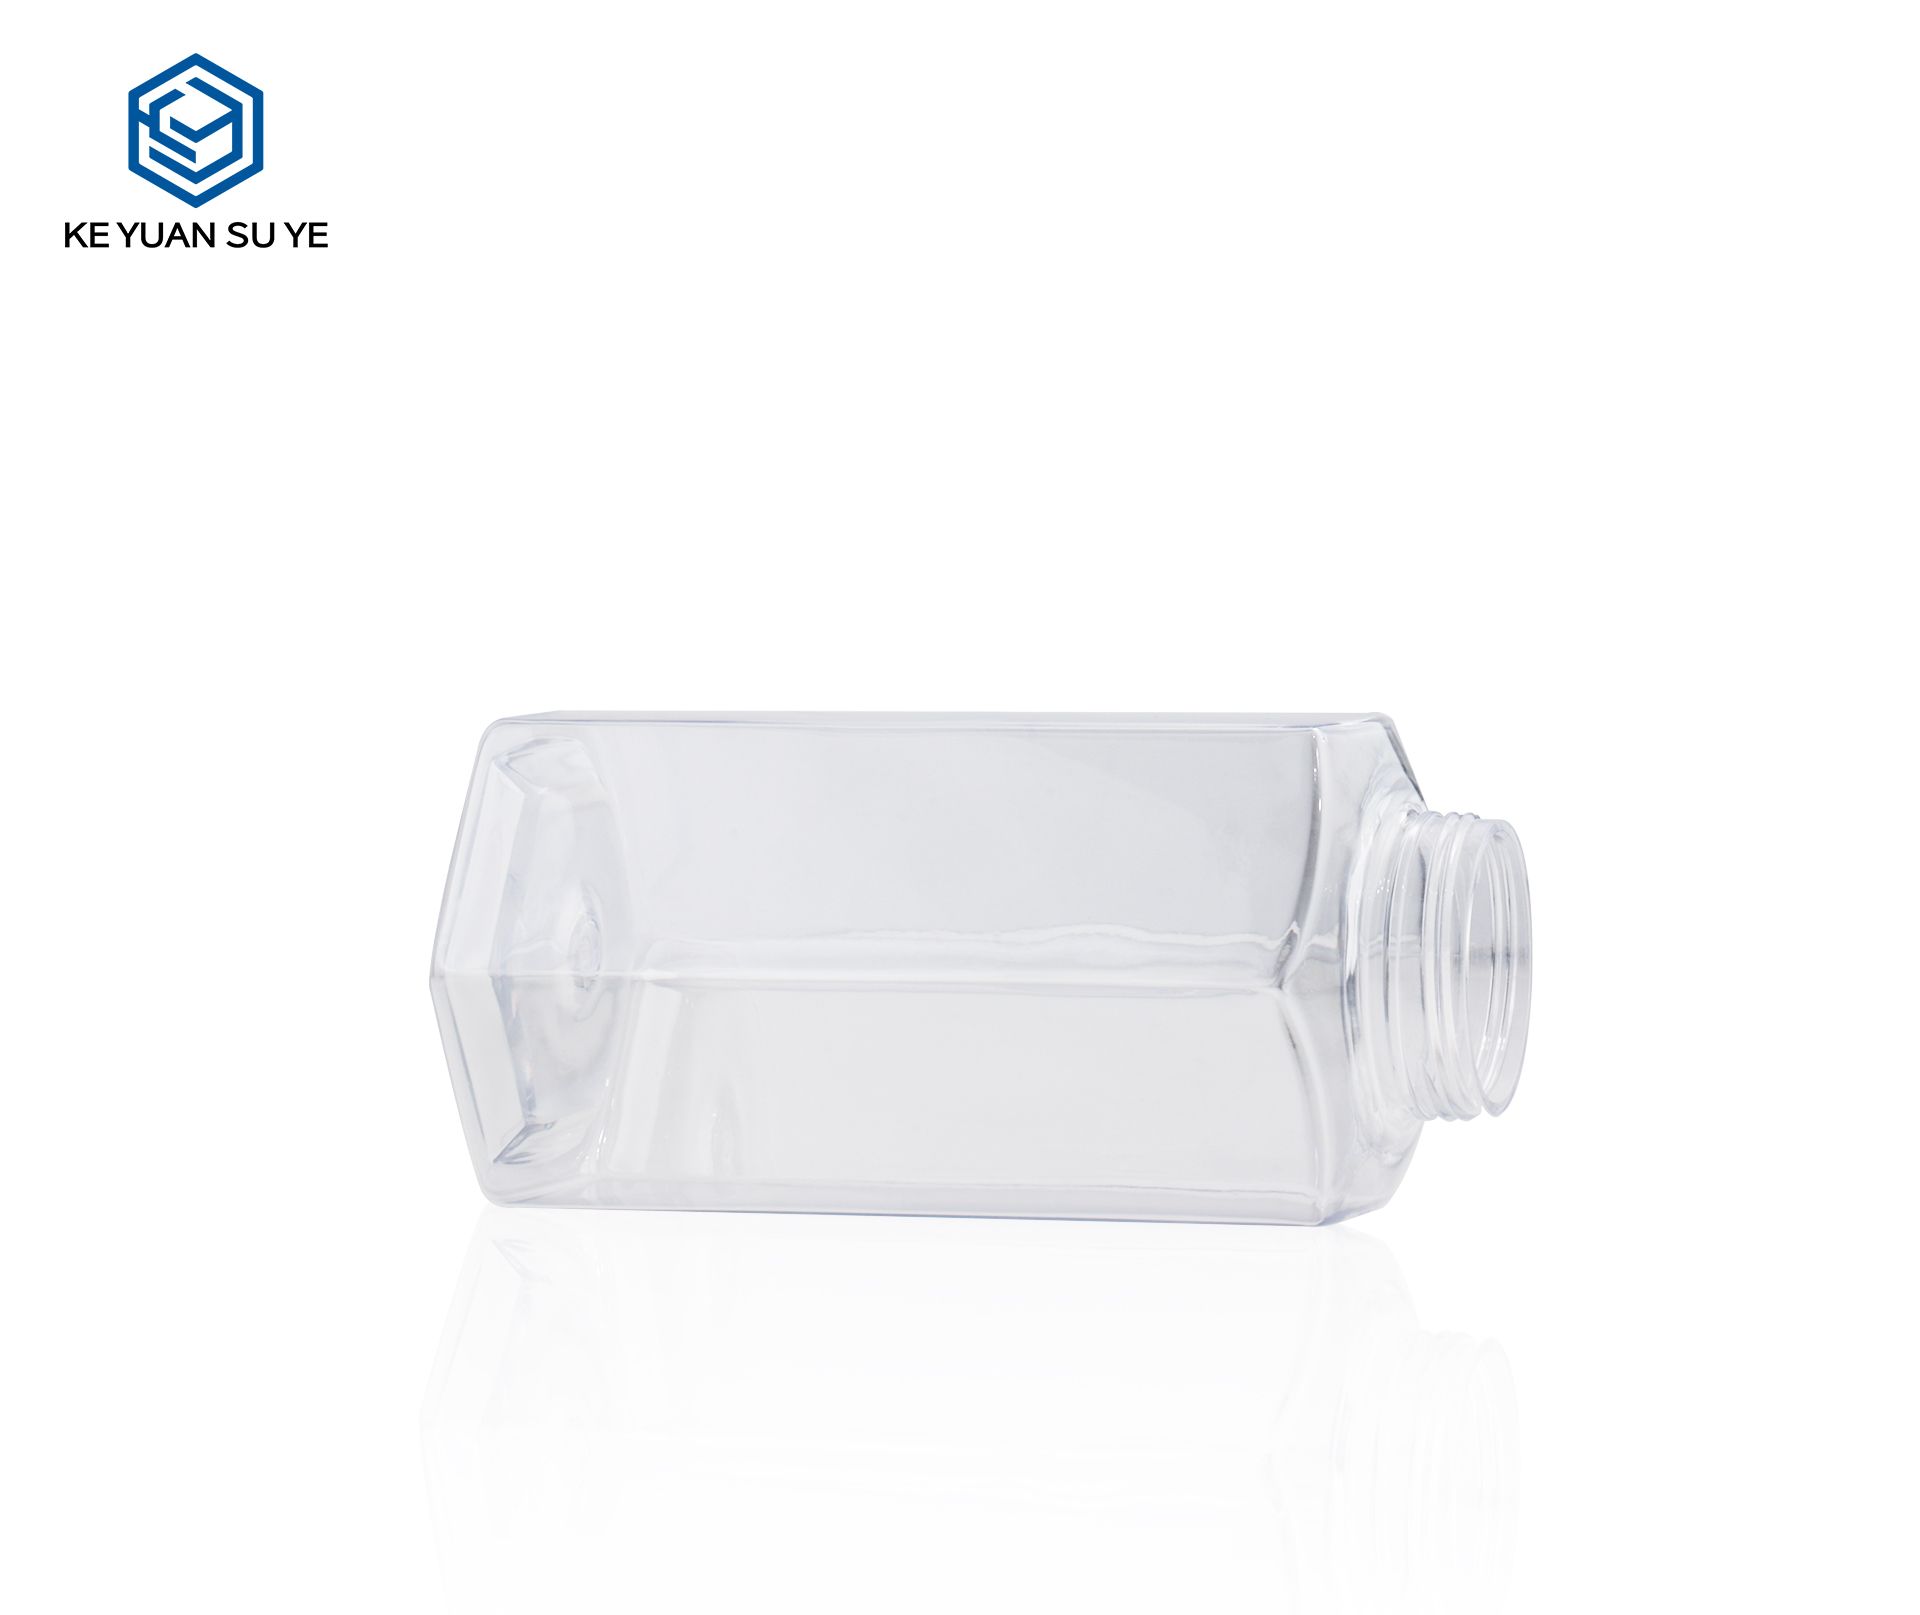 KY240 Empty 650ml Transparent Plastic Shampoo Bottle with Pump